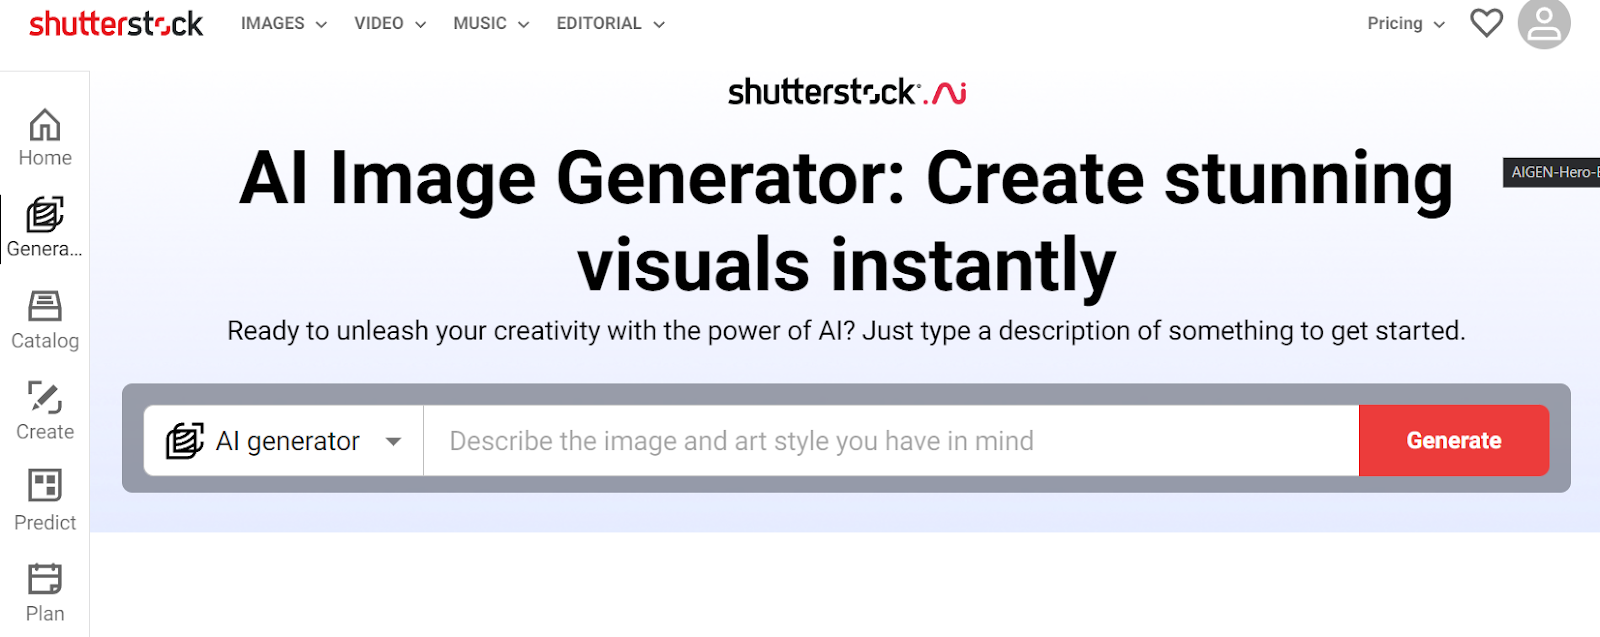 Shutterstock’s AI Image Platform Takes Flight